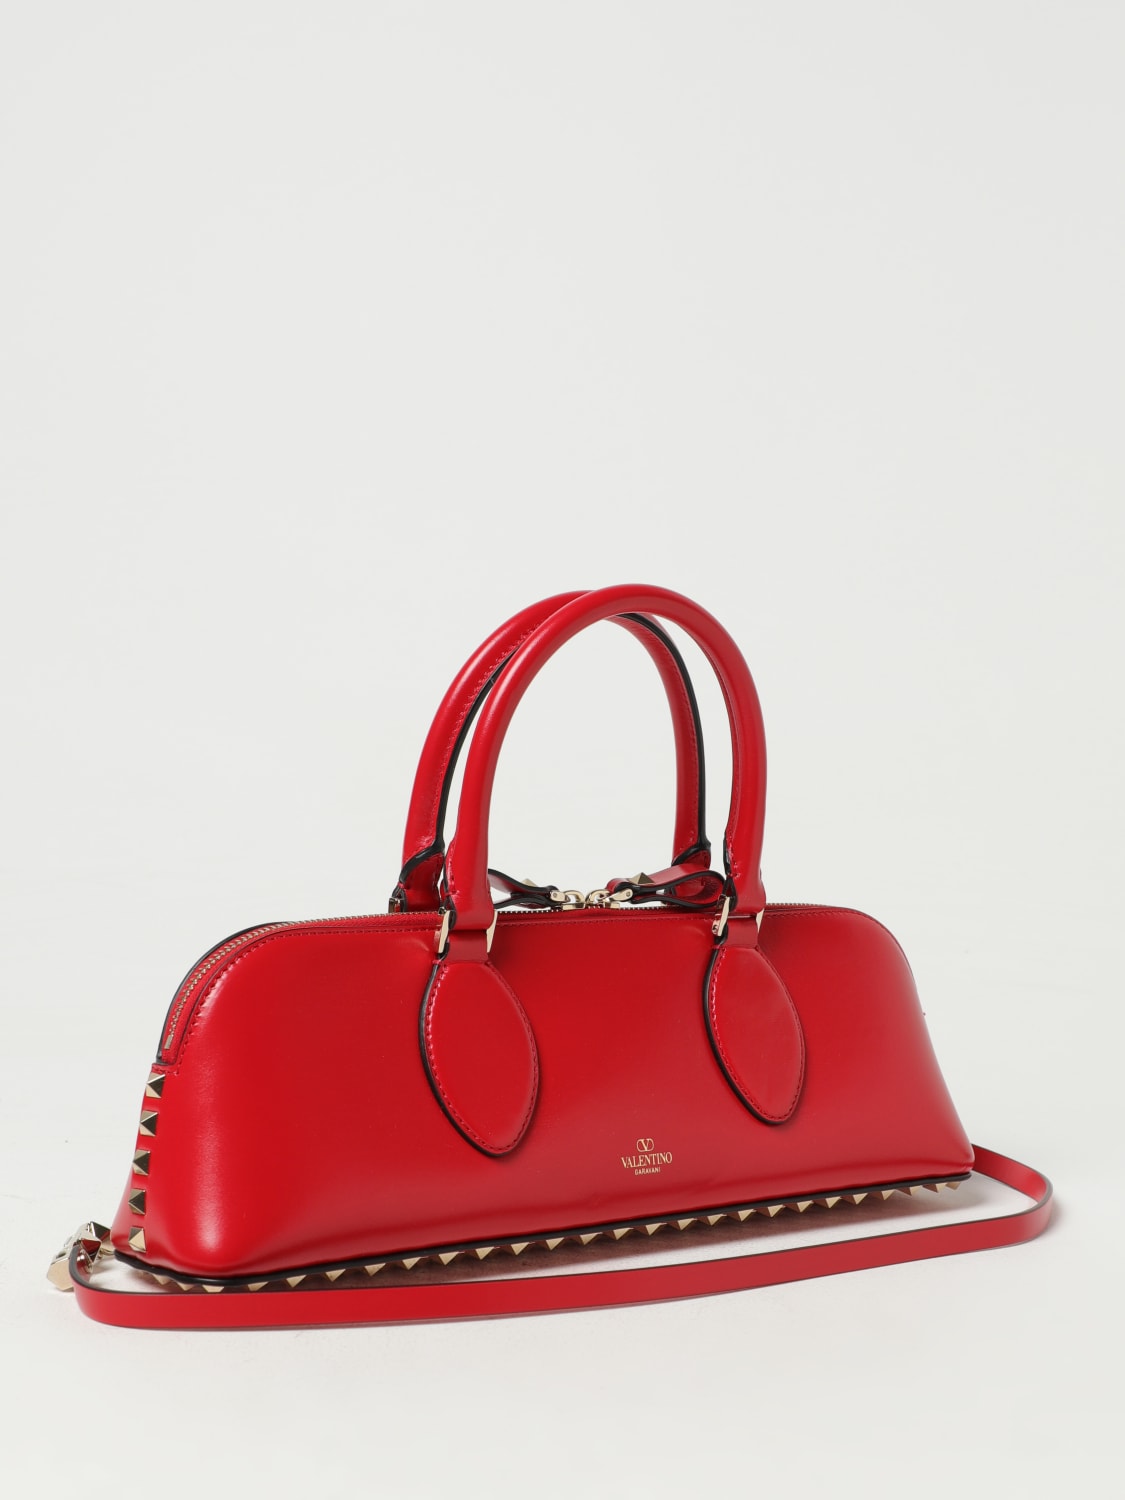 Red Valentino Garavani Rockstud Handbag - clothing & accessories